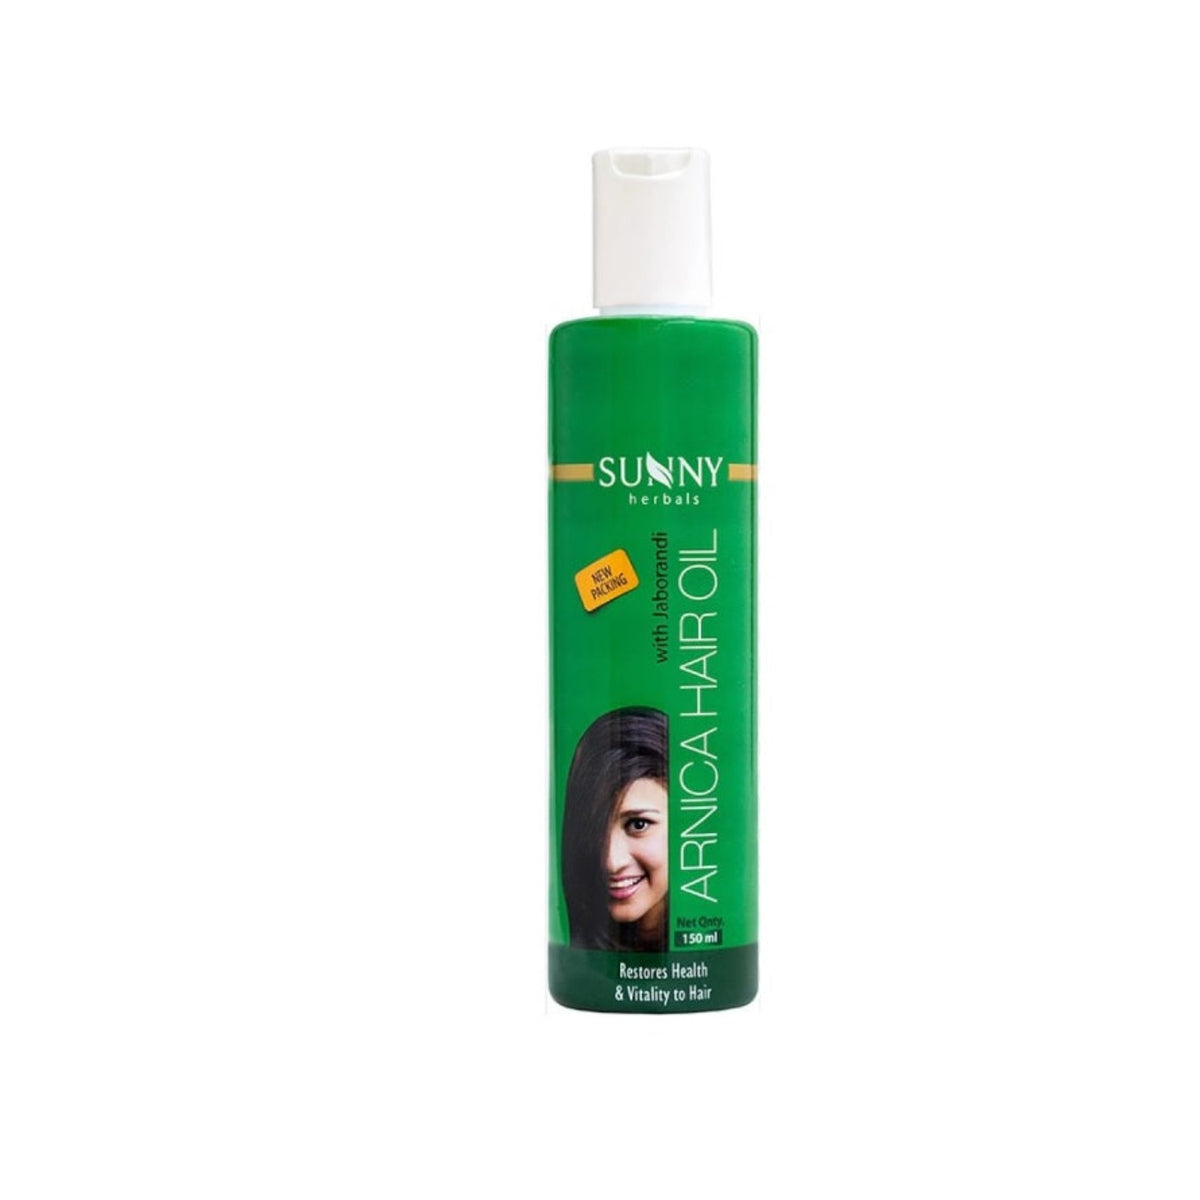 Bakson's Sunny Herbals Arnica With Jaborandi Restores Health & Vitality To Hair Hair Oil